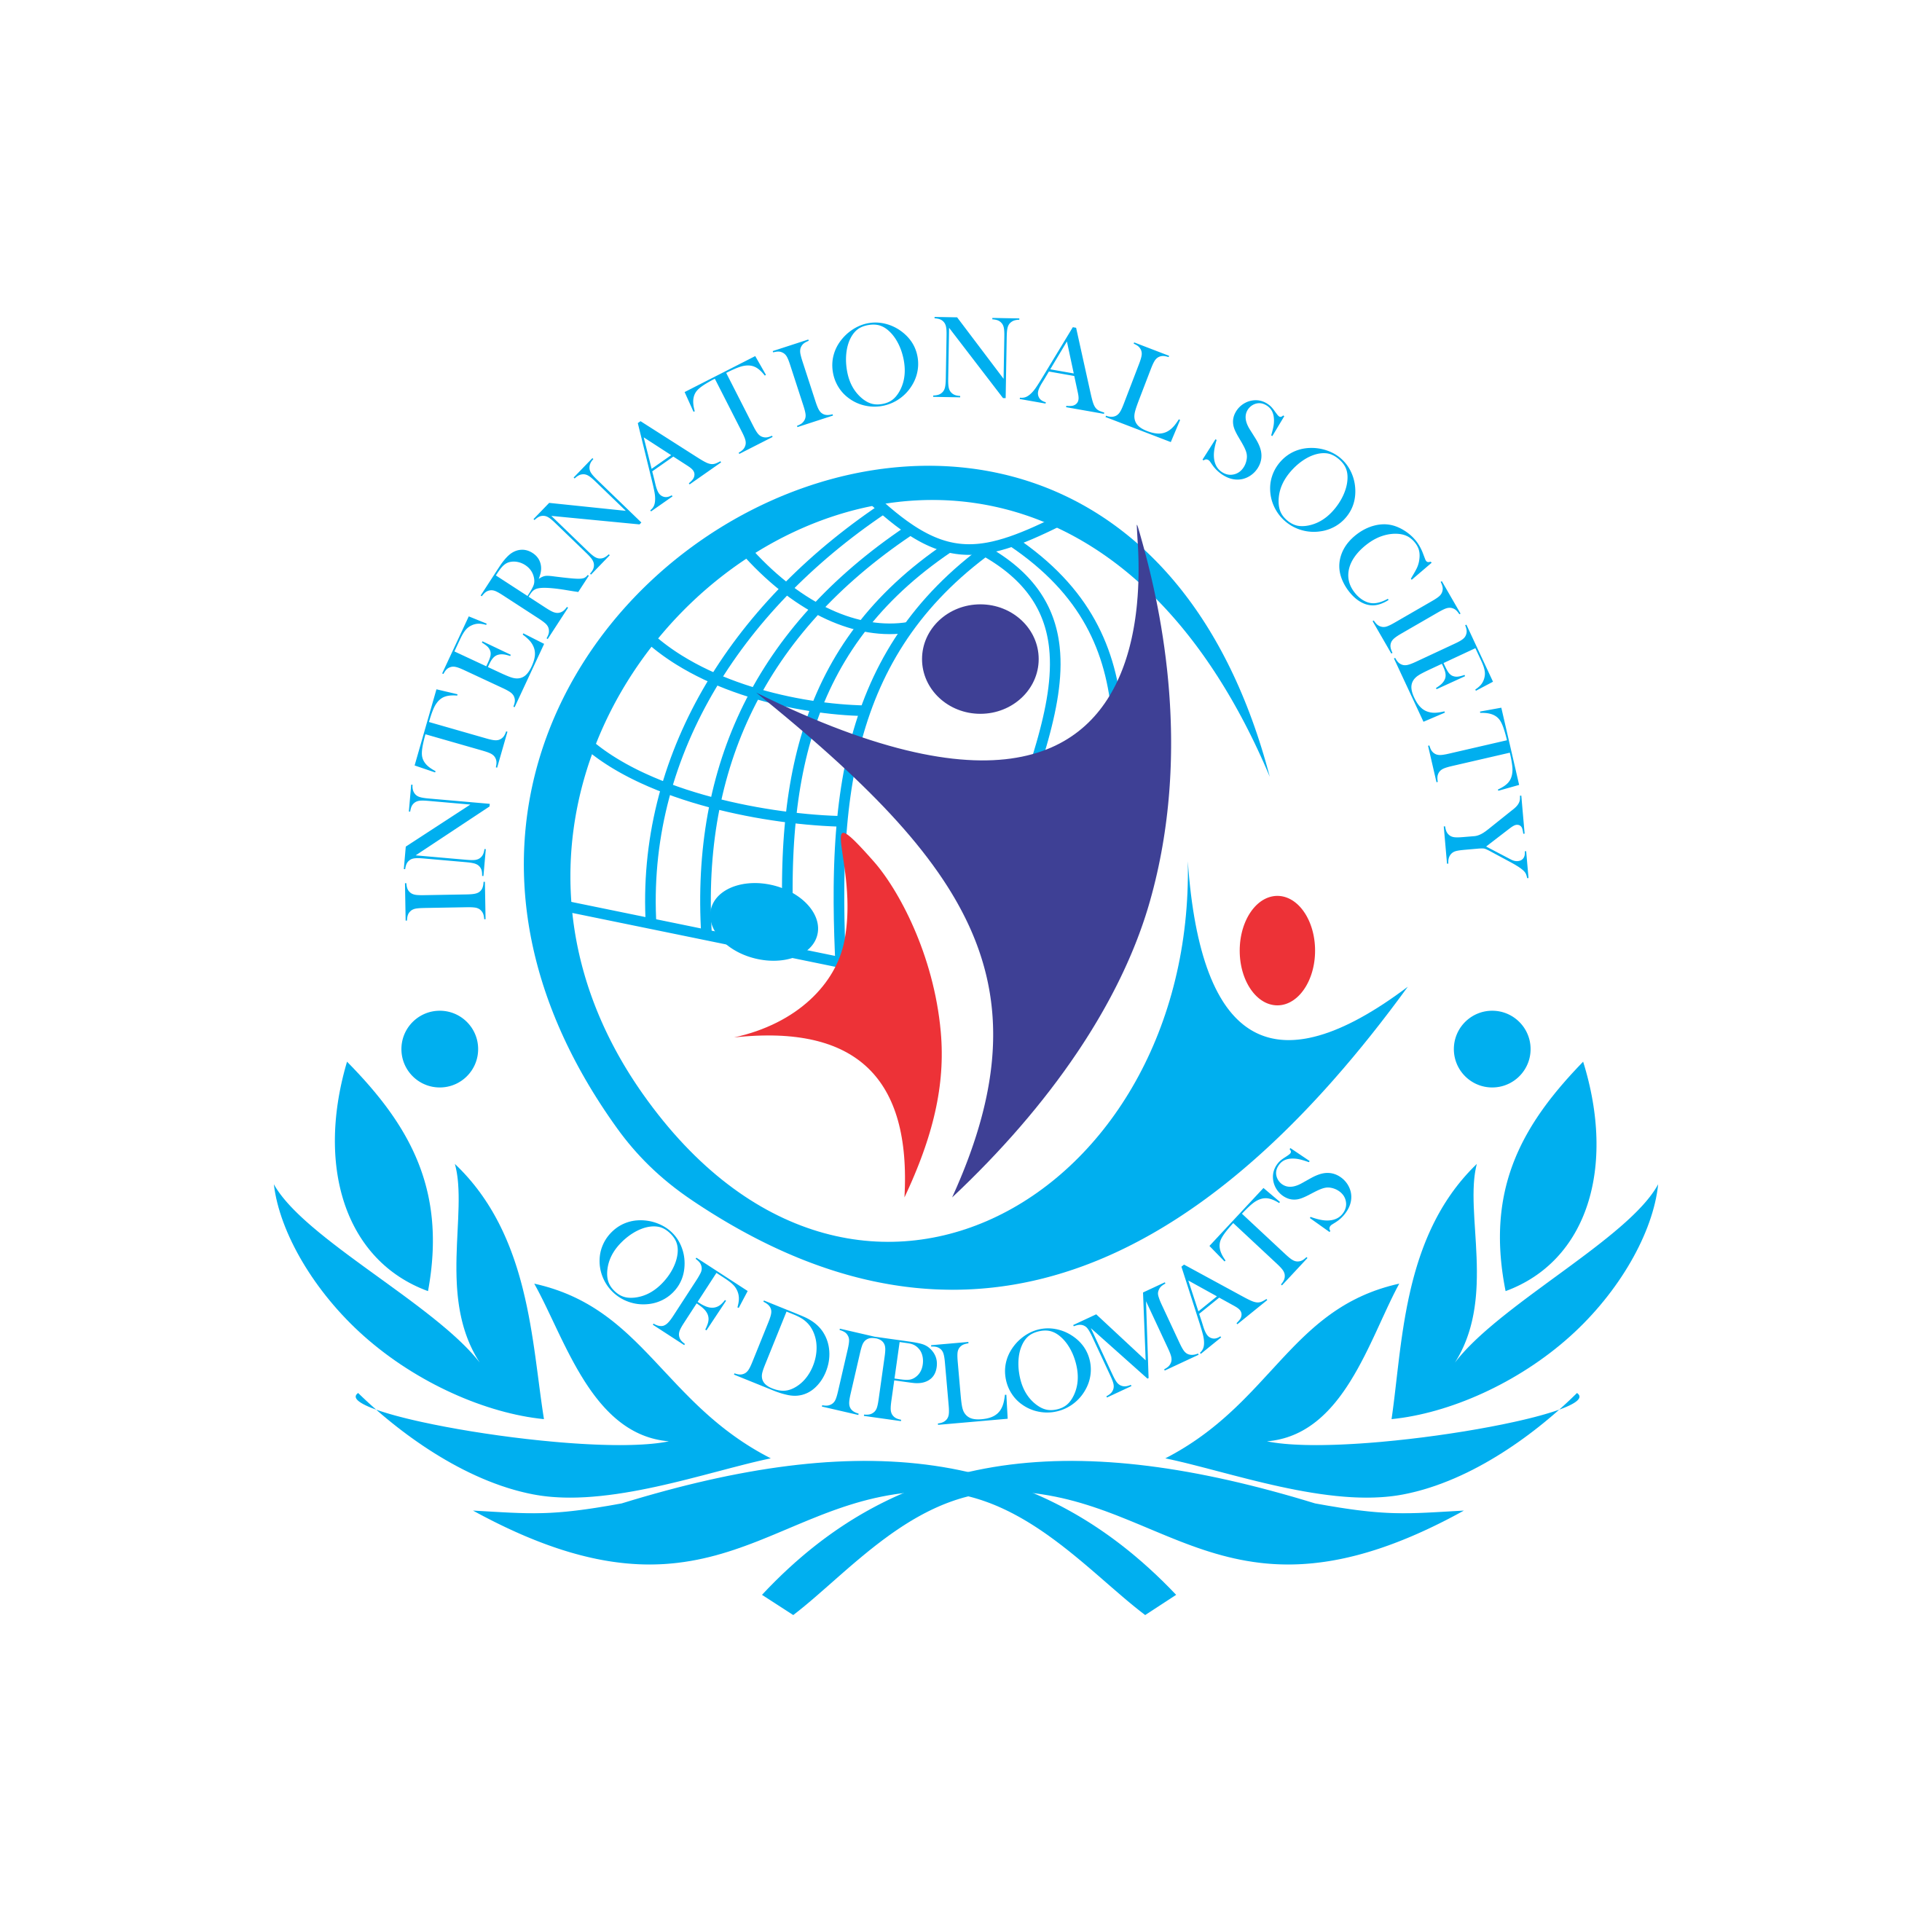 International Society of Diplomats